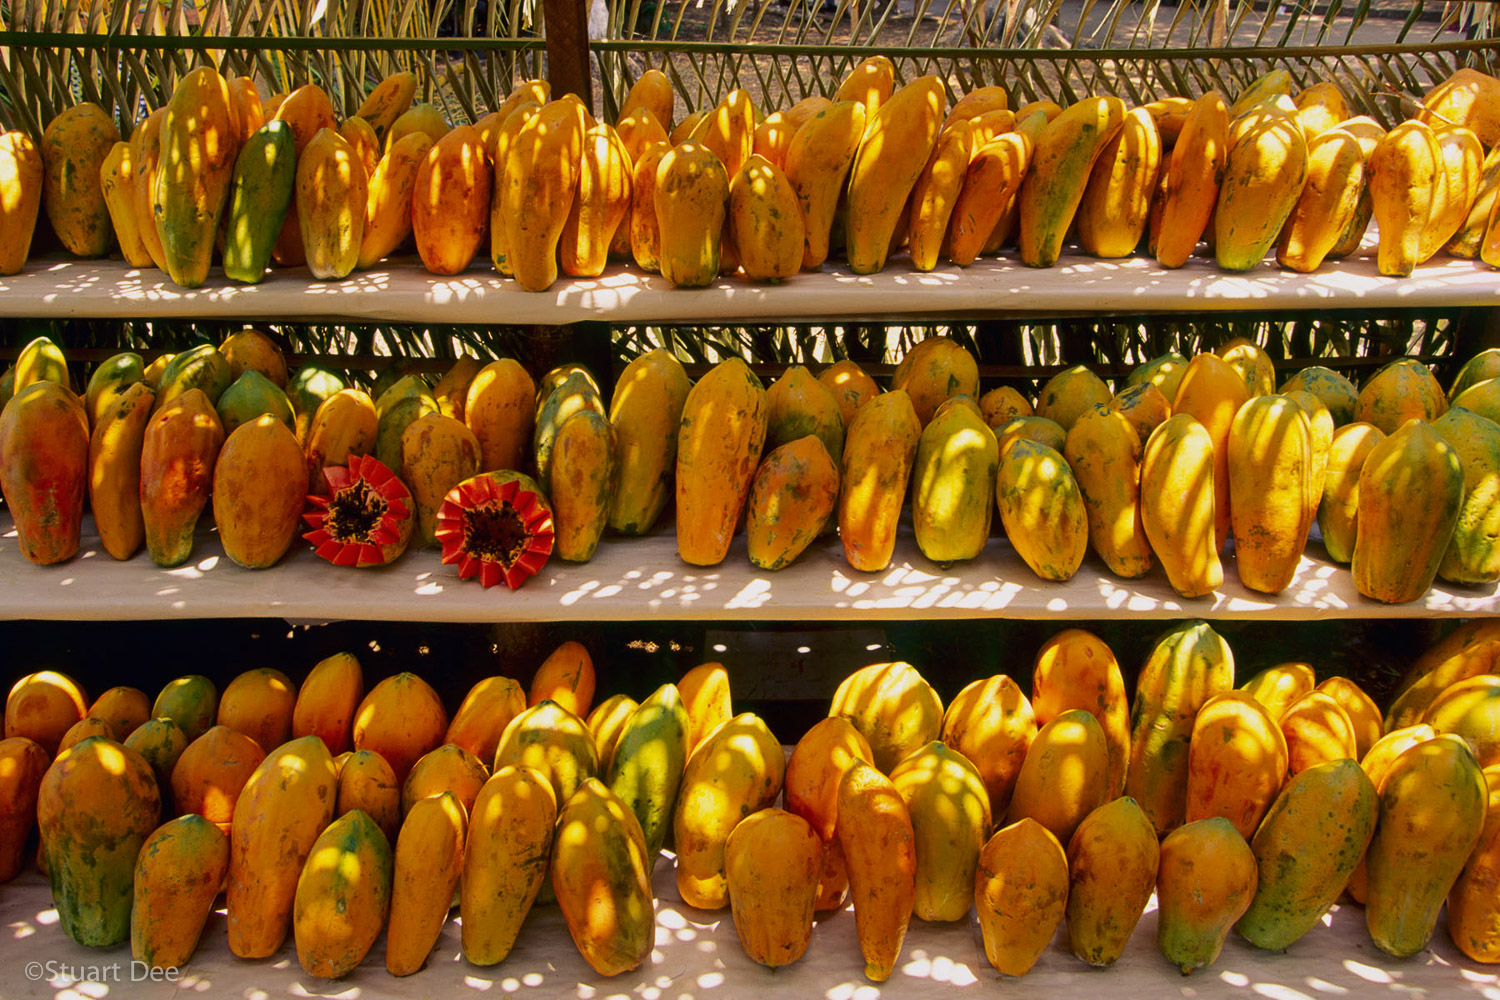  Sun dappled ripe papayas displayed on shelves at a fruit market, Orotina, Alajulea, Costa Rica
Papaya (Carica papaya) has high nutritional value and has more carotene than most other fruits. 